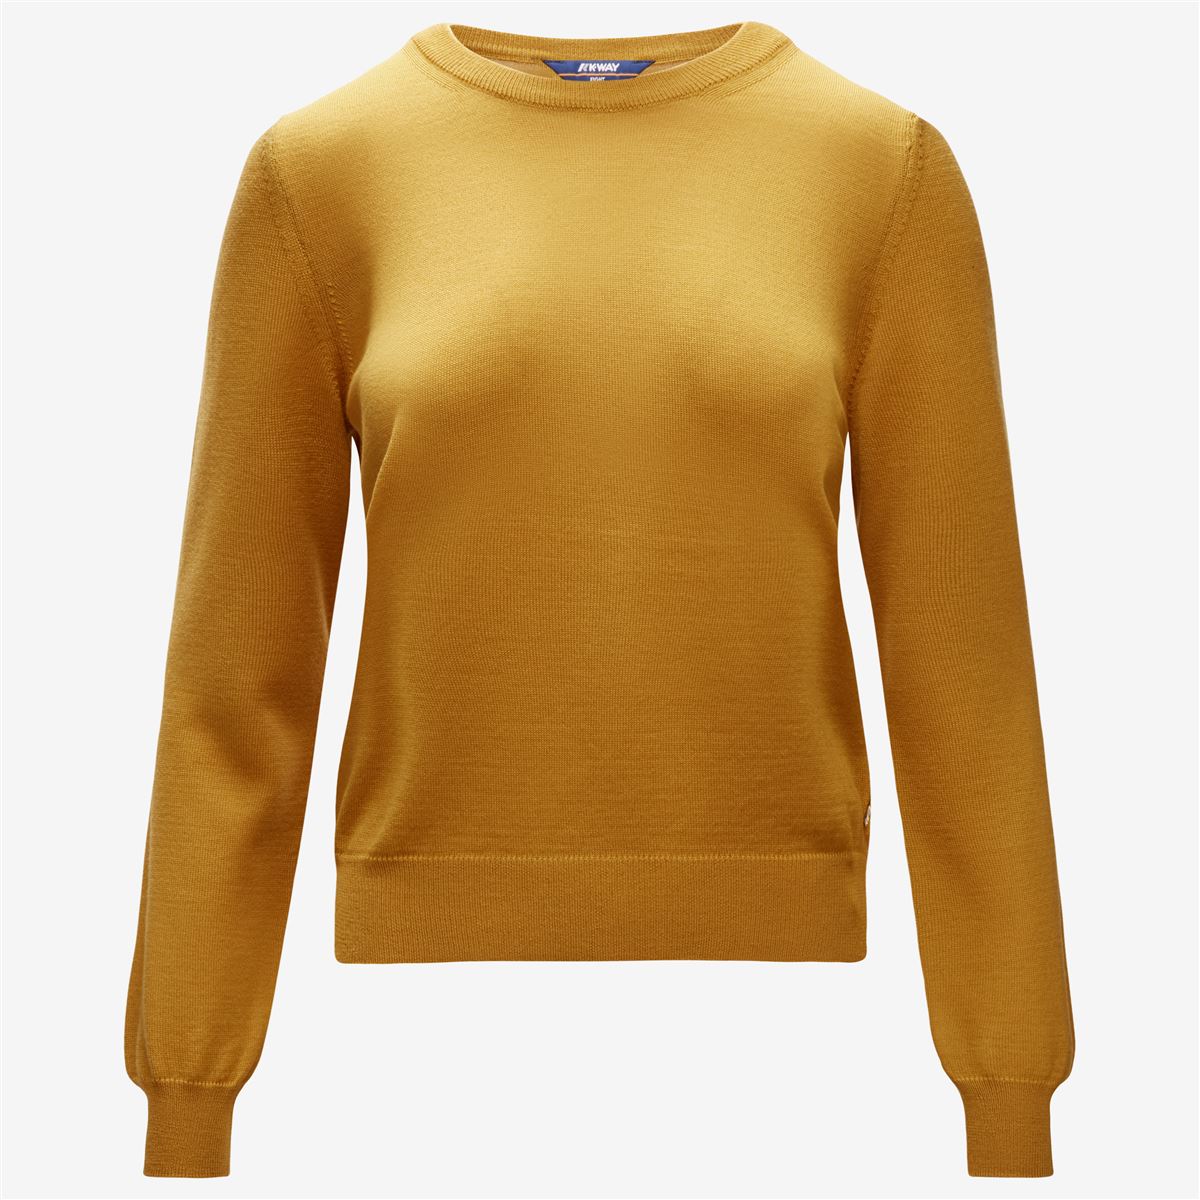 ABBI MERINO - Knitwear - Pull  Over - Woman - Yellow Raspberry